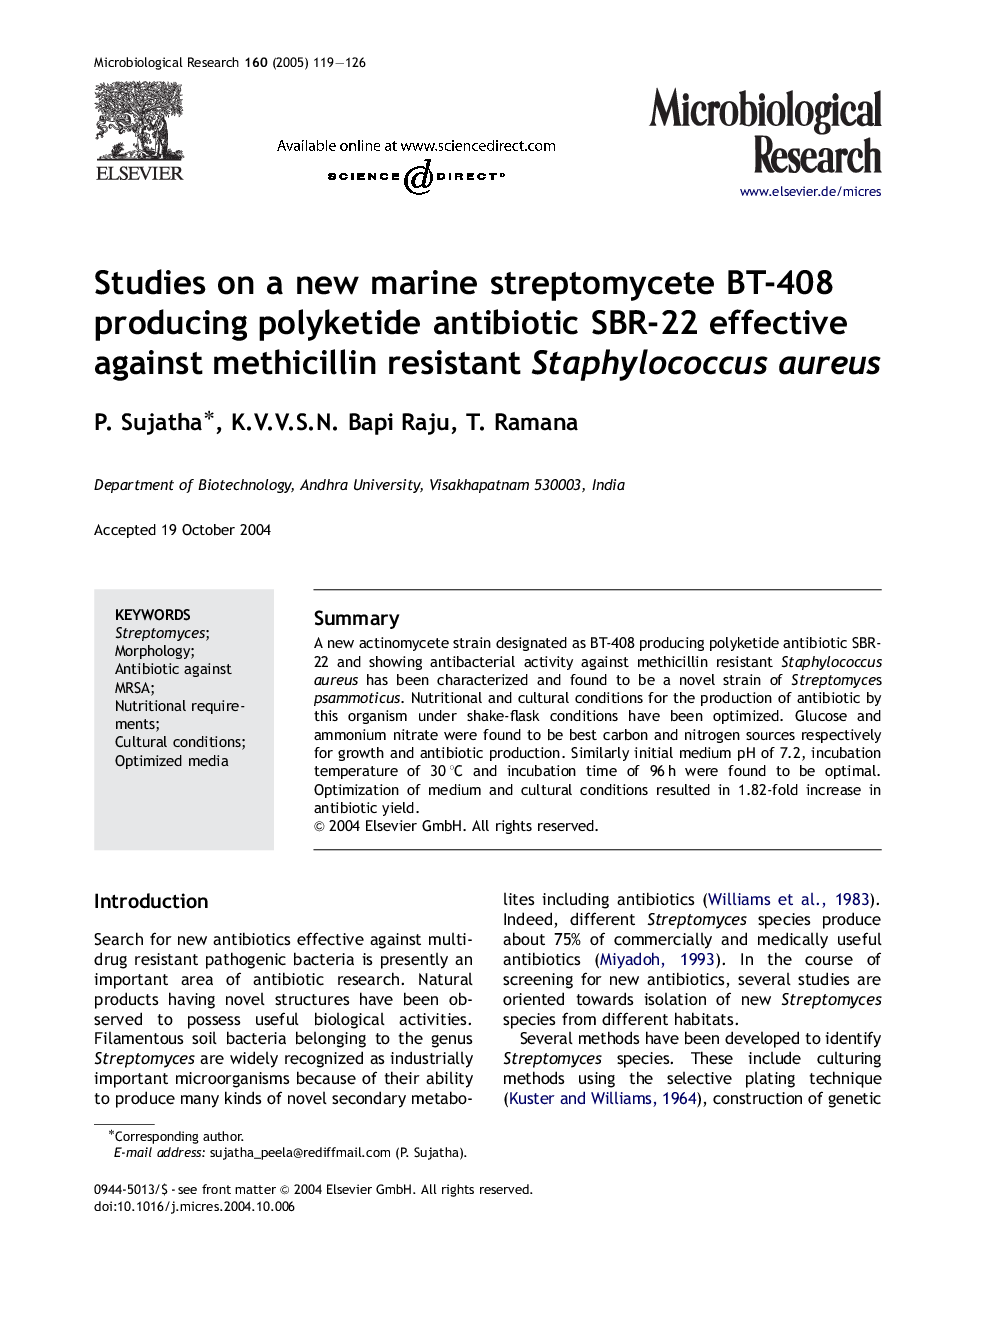 Studies on a new marine streptomycete BT-408 producing polyketide antibiotic SBR-22 effective against methicillin resistant Staphylococcus aureus